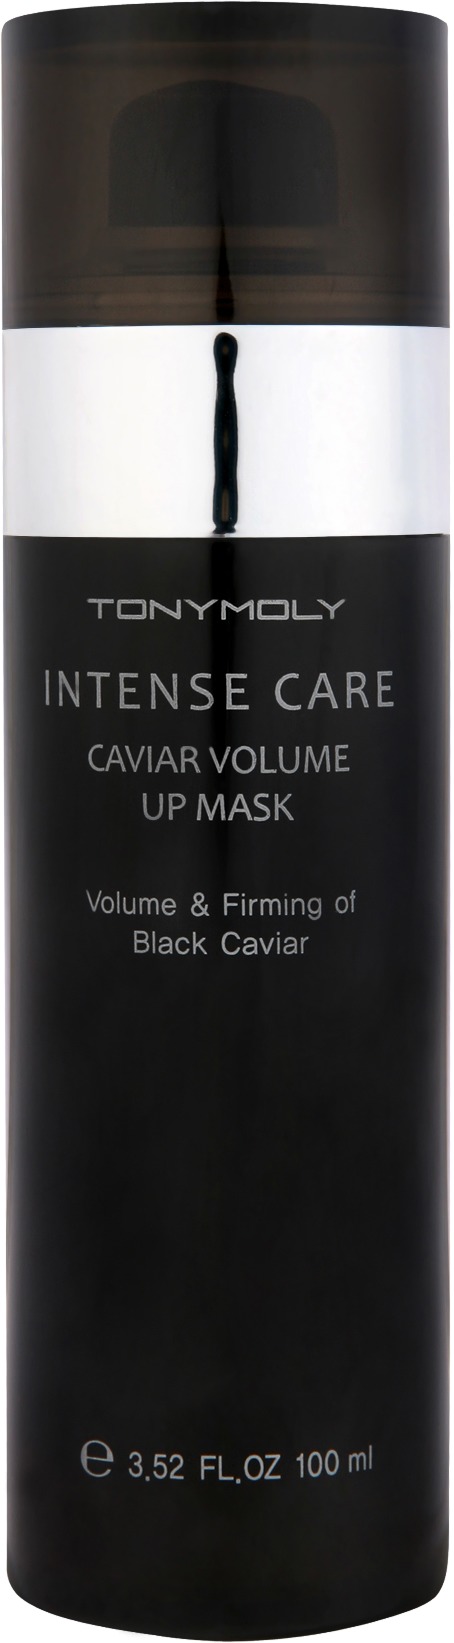 Tony Moly Intense Care Caviar Volume Up Mask